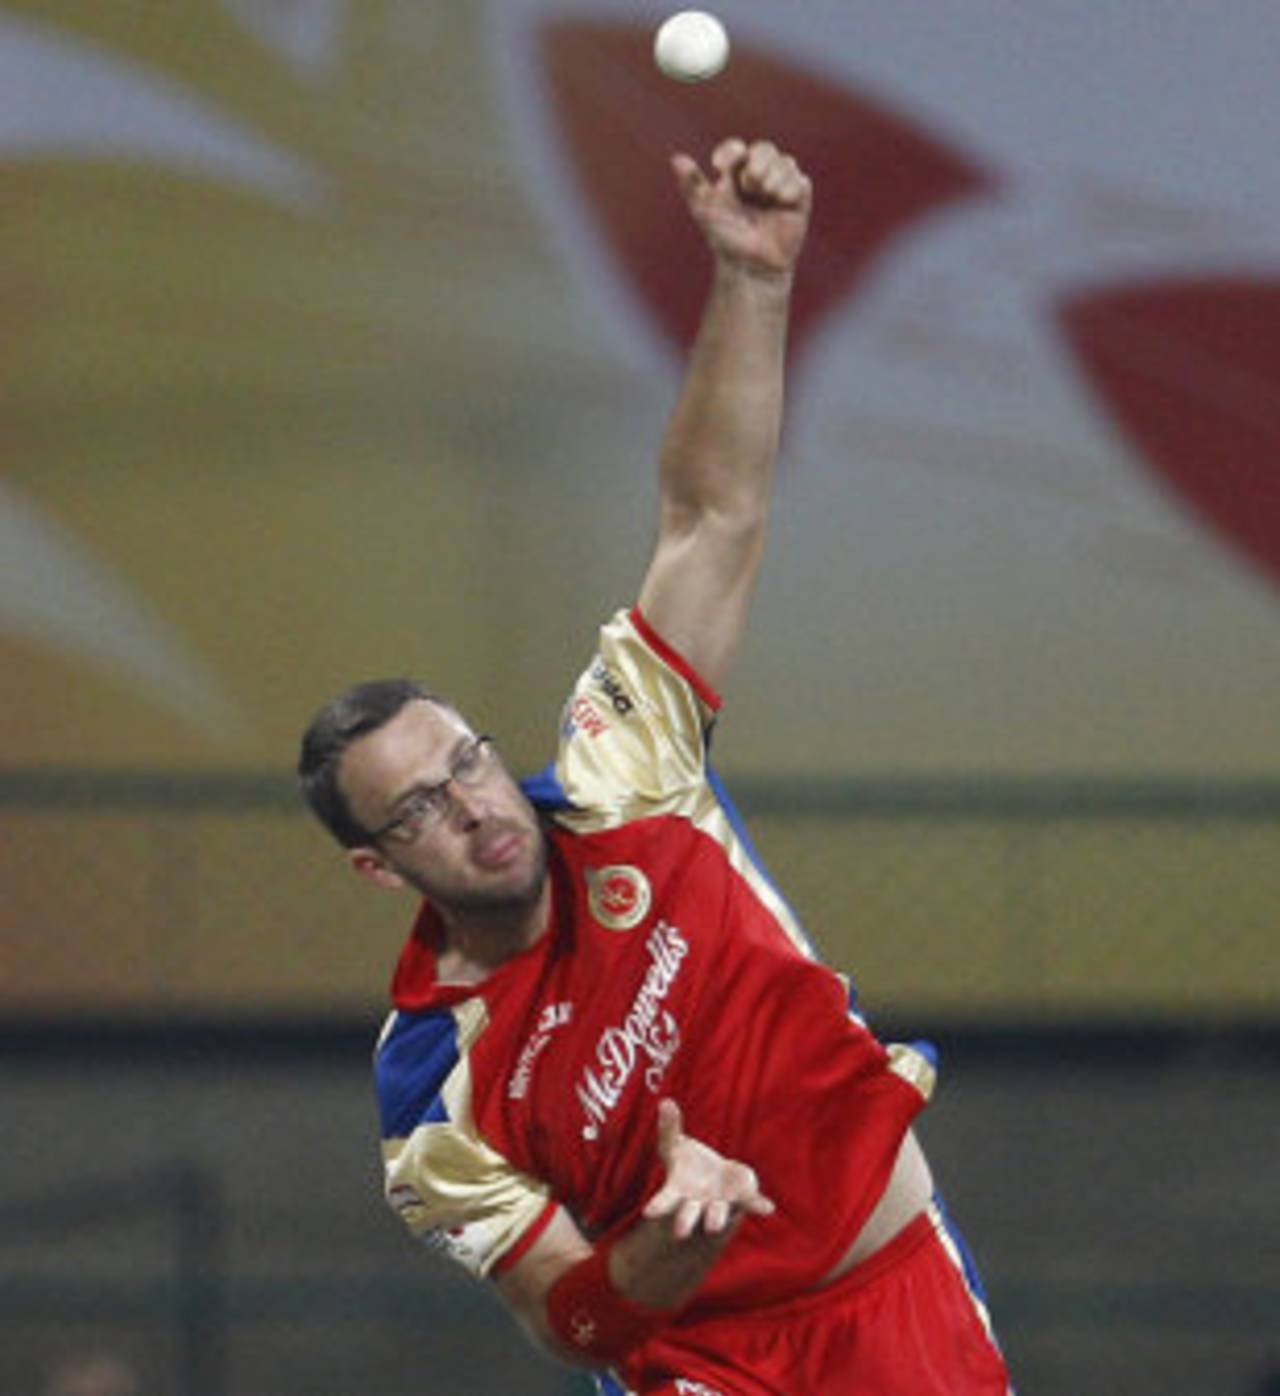 Daniel Vettori bowls during his spell of 4-0-26-2, Royal Challengers Bangalore v Warriors, CLT20, Bangalore, September 23, 2011